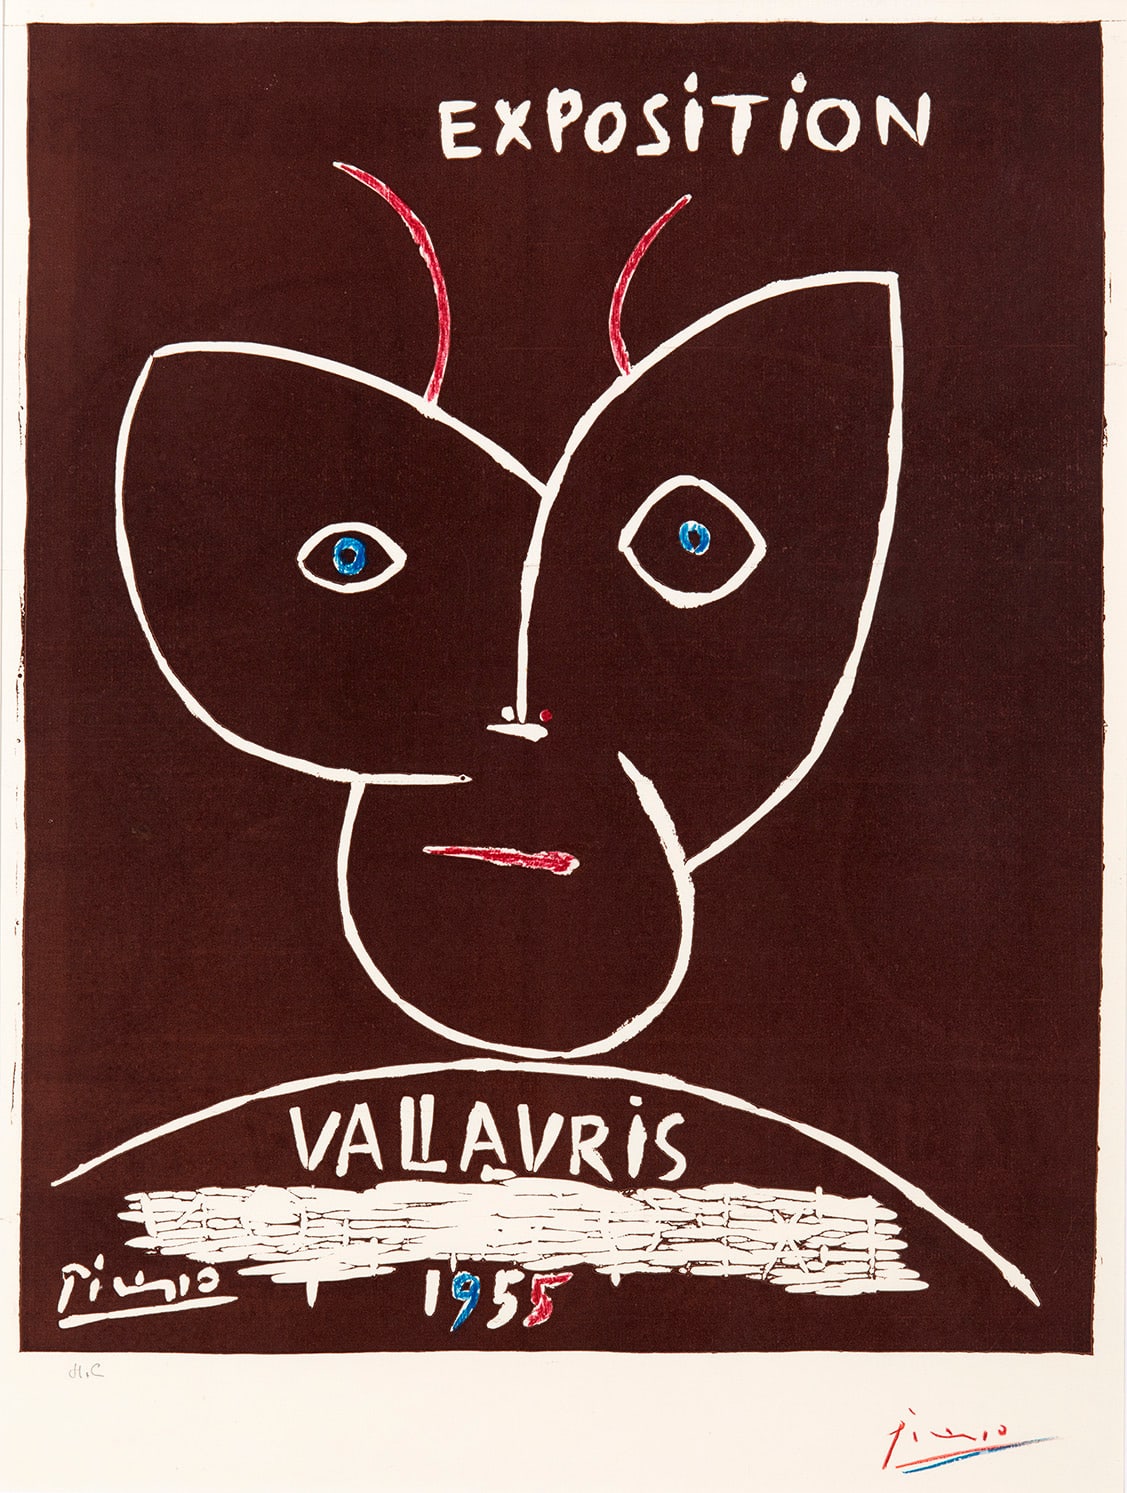 PABLO PICASSO, Exposition Vallauris, 1955